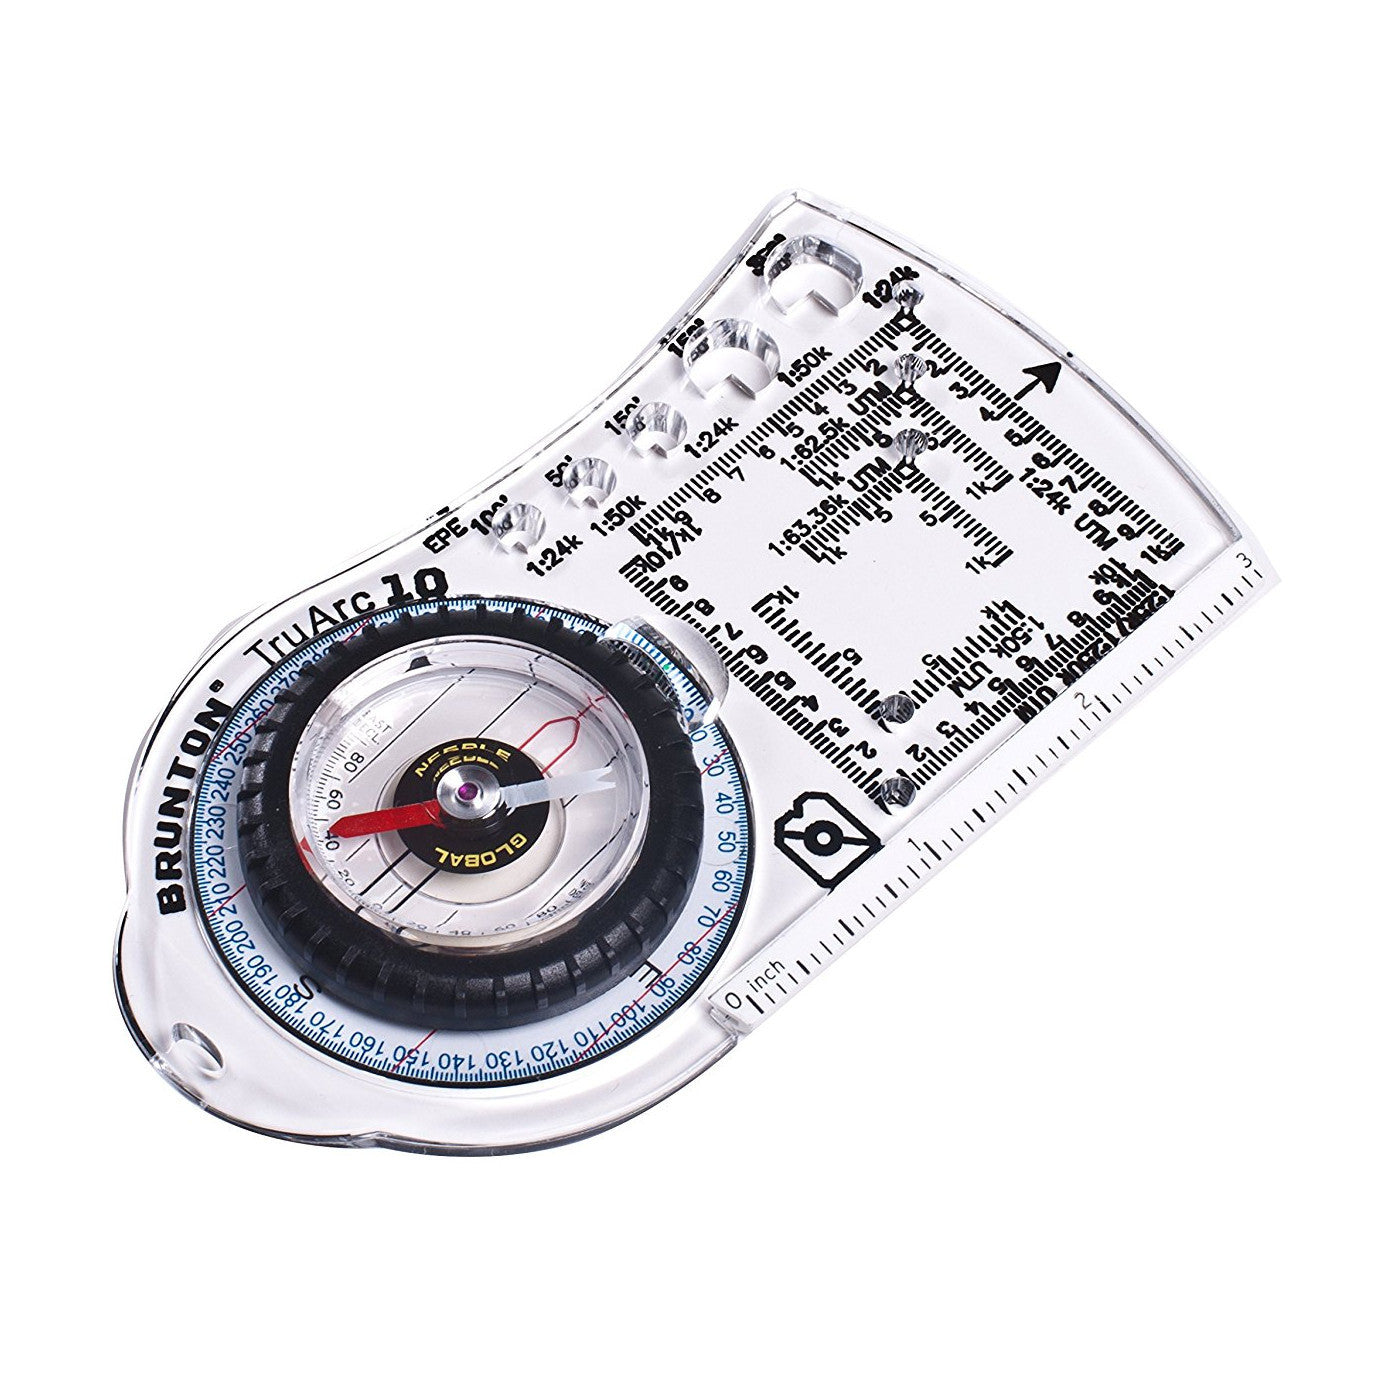 Brunton TRUARC™ 10 Professional Baseplate Compass